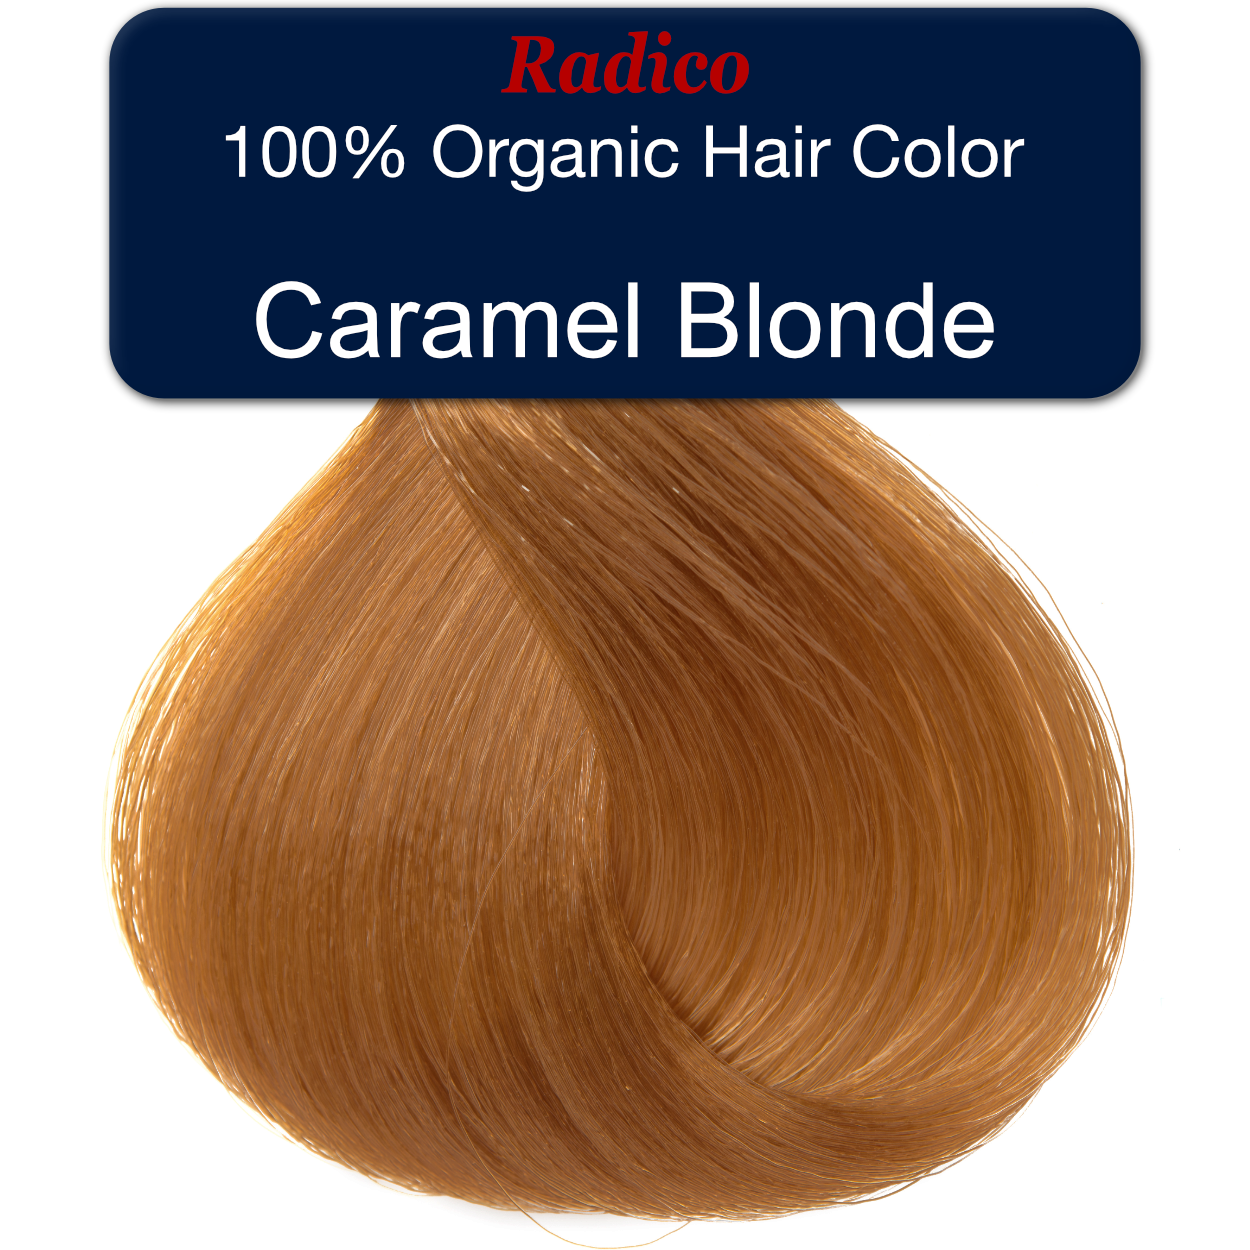 Caramel Blonde - Non-Toxic & 100% Organic – USA